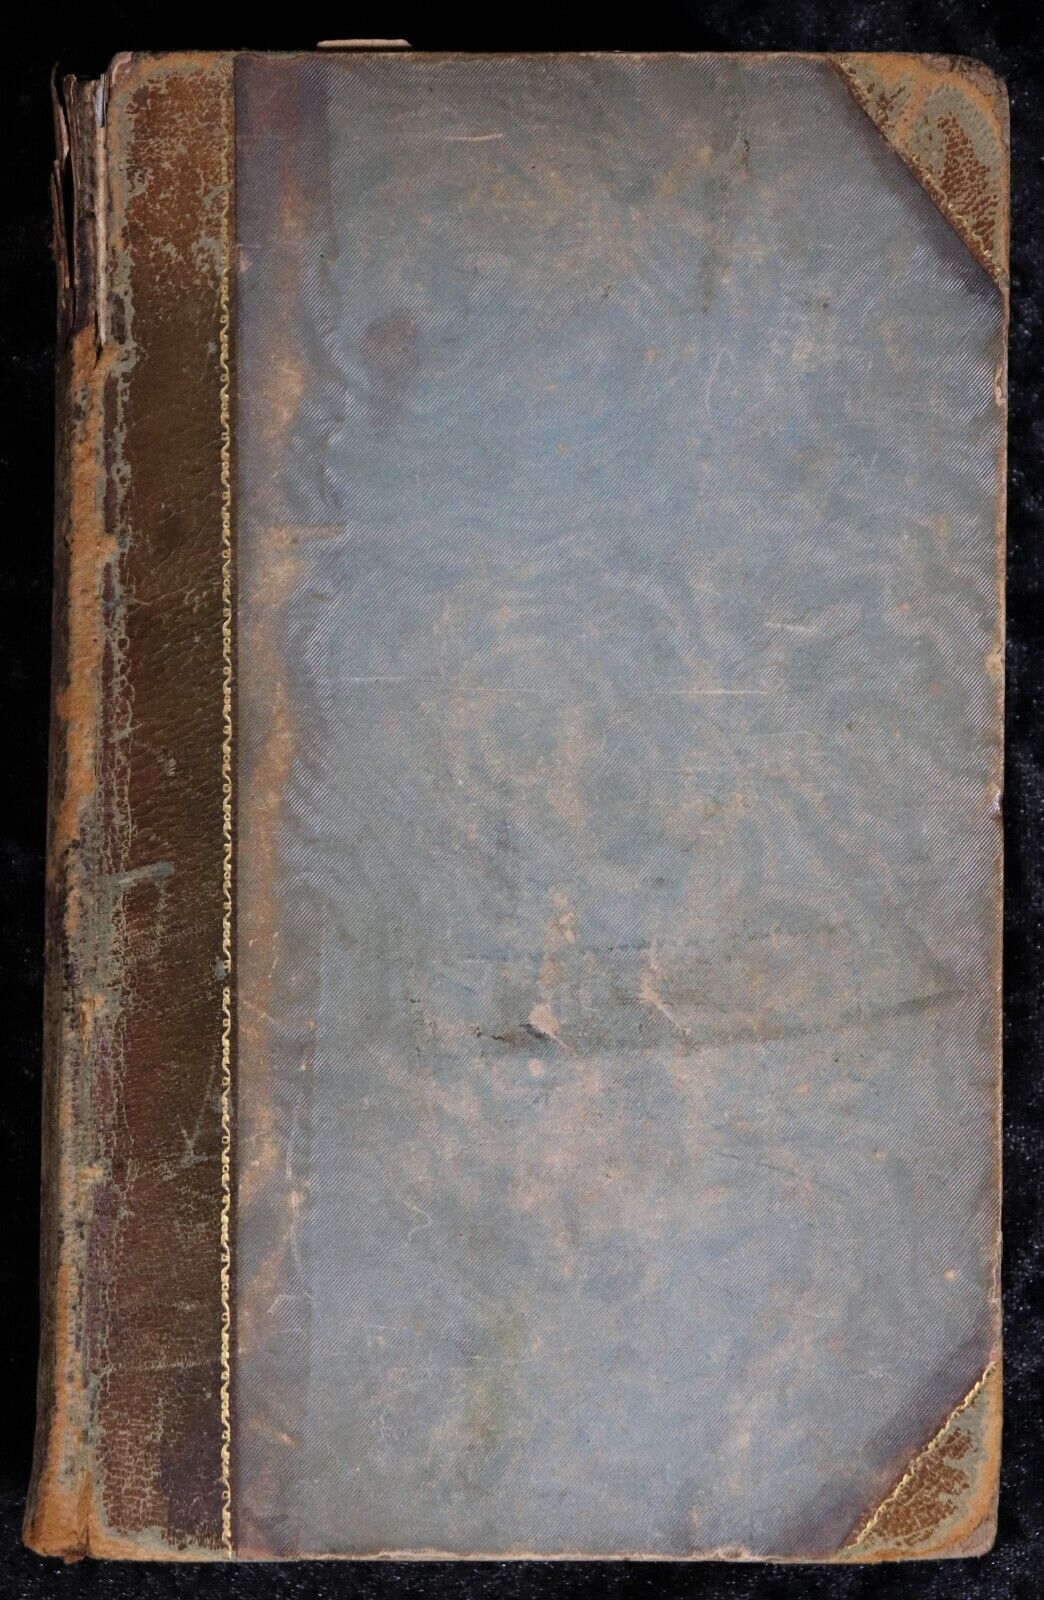 The Jockey Club by C Pigott - 1792 - Antiquarian Etiquette & Manners Book